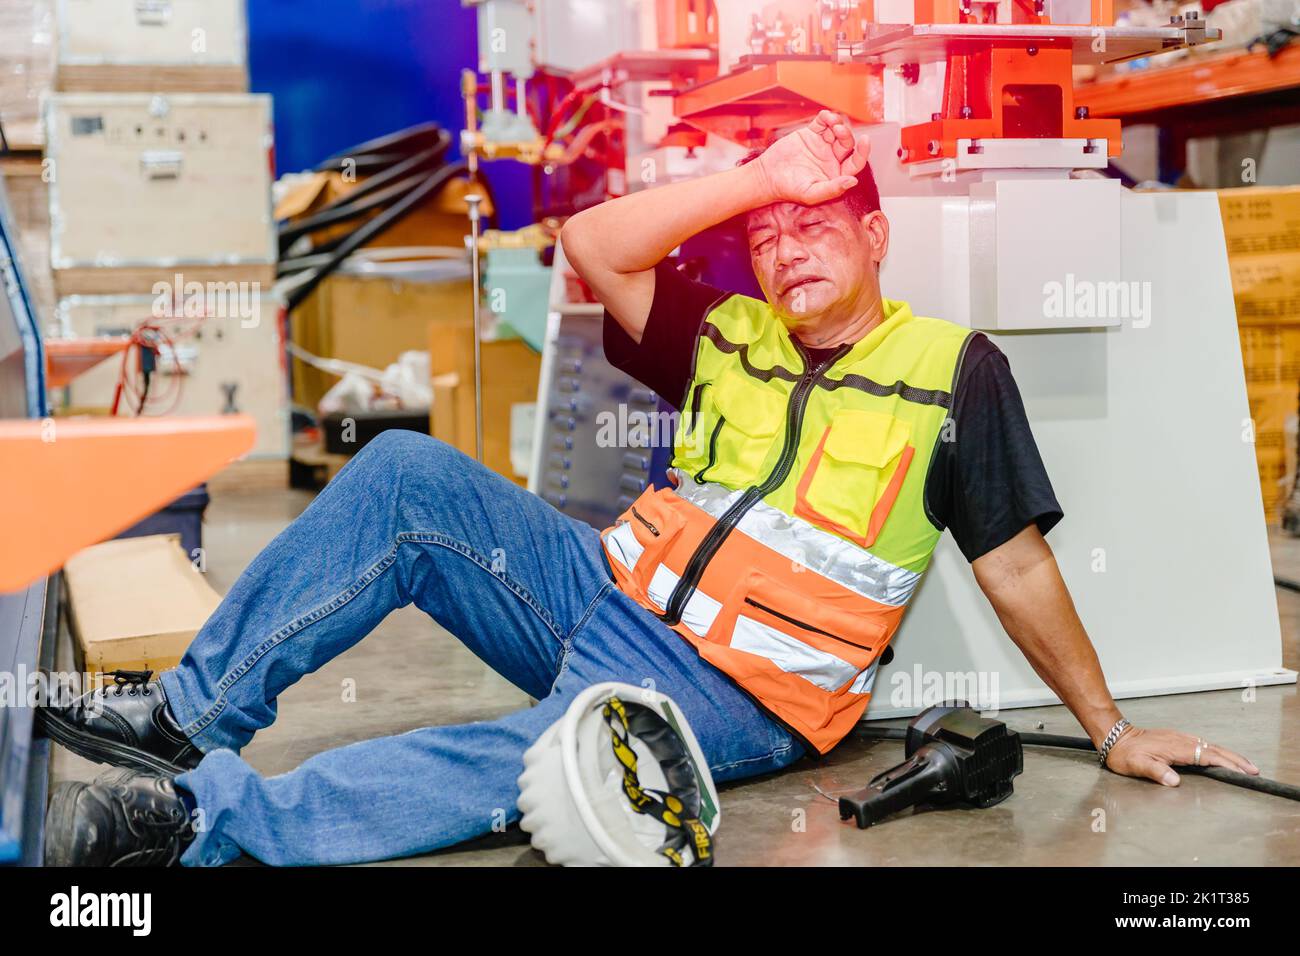 Asian worker Industry engineer staff man illness sick from flu headache uncomfortable down on the floor need emergency medical help. Stock Photo